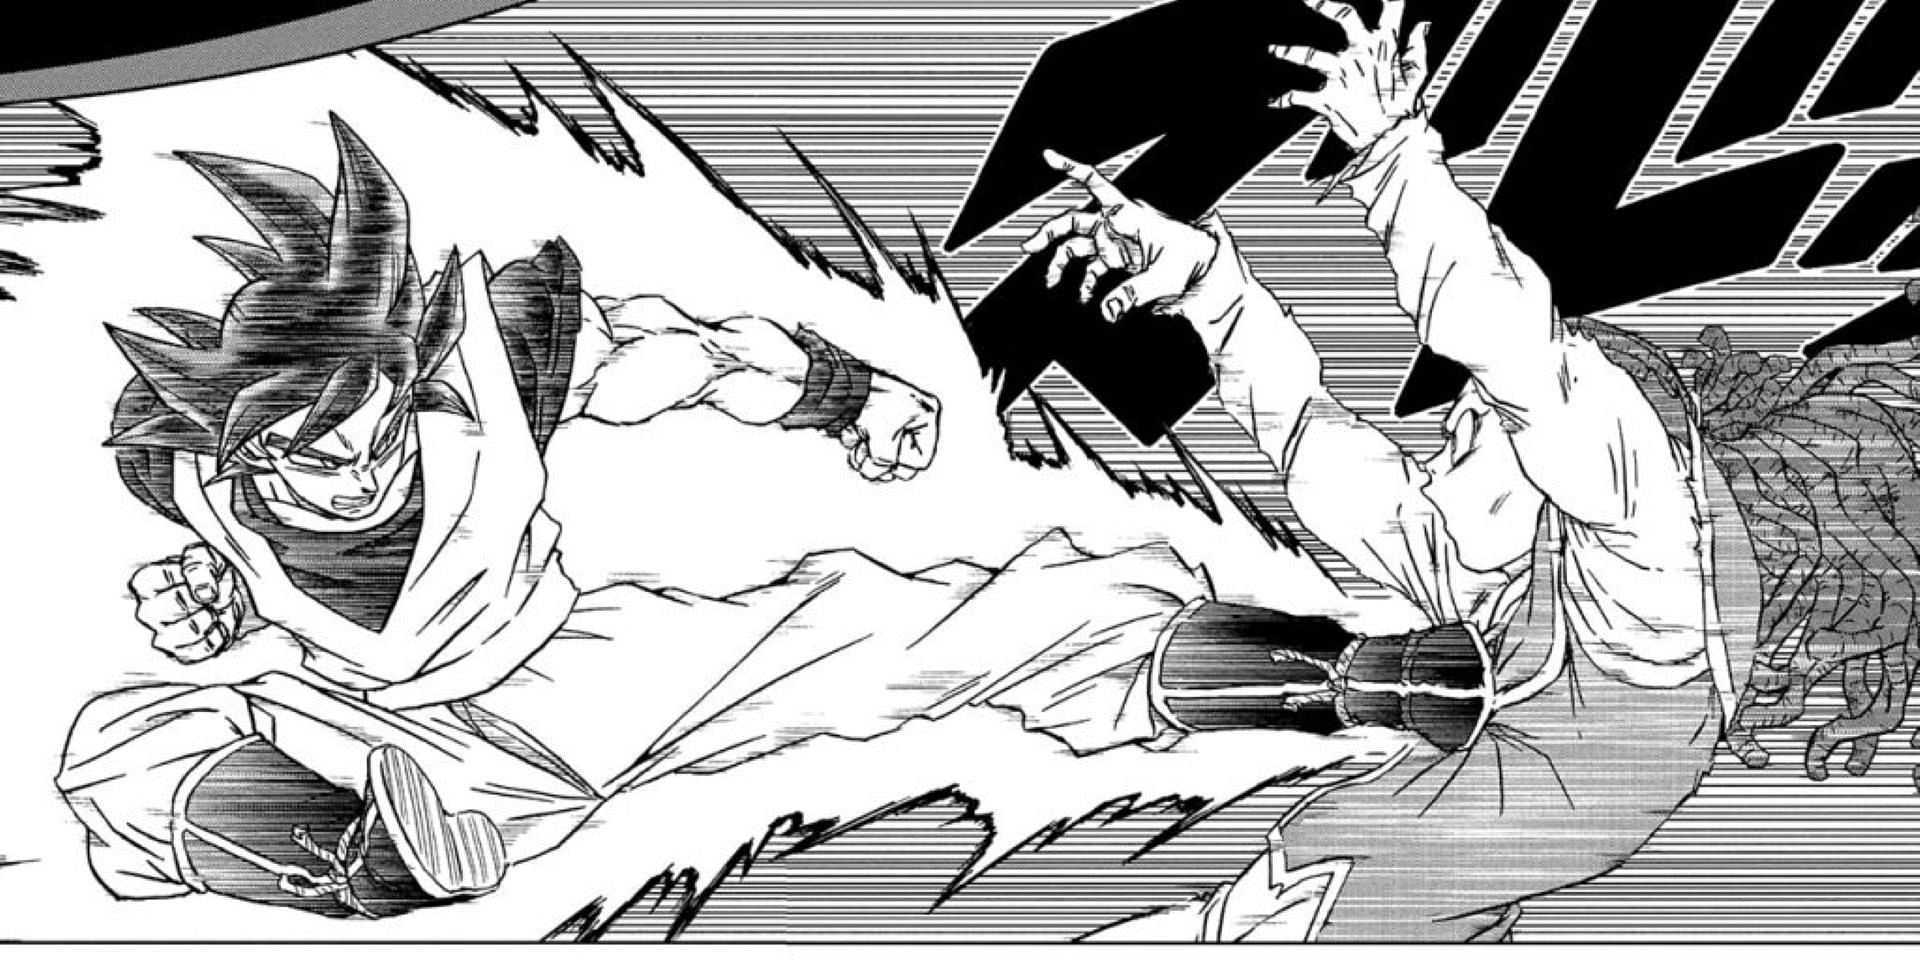 True Ultra Instinct Goku kicking Gas in the Dragon Ball Super Manga